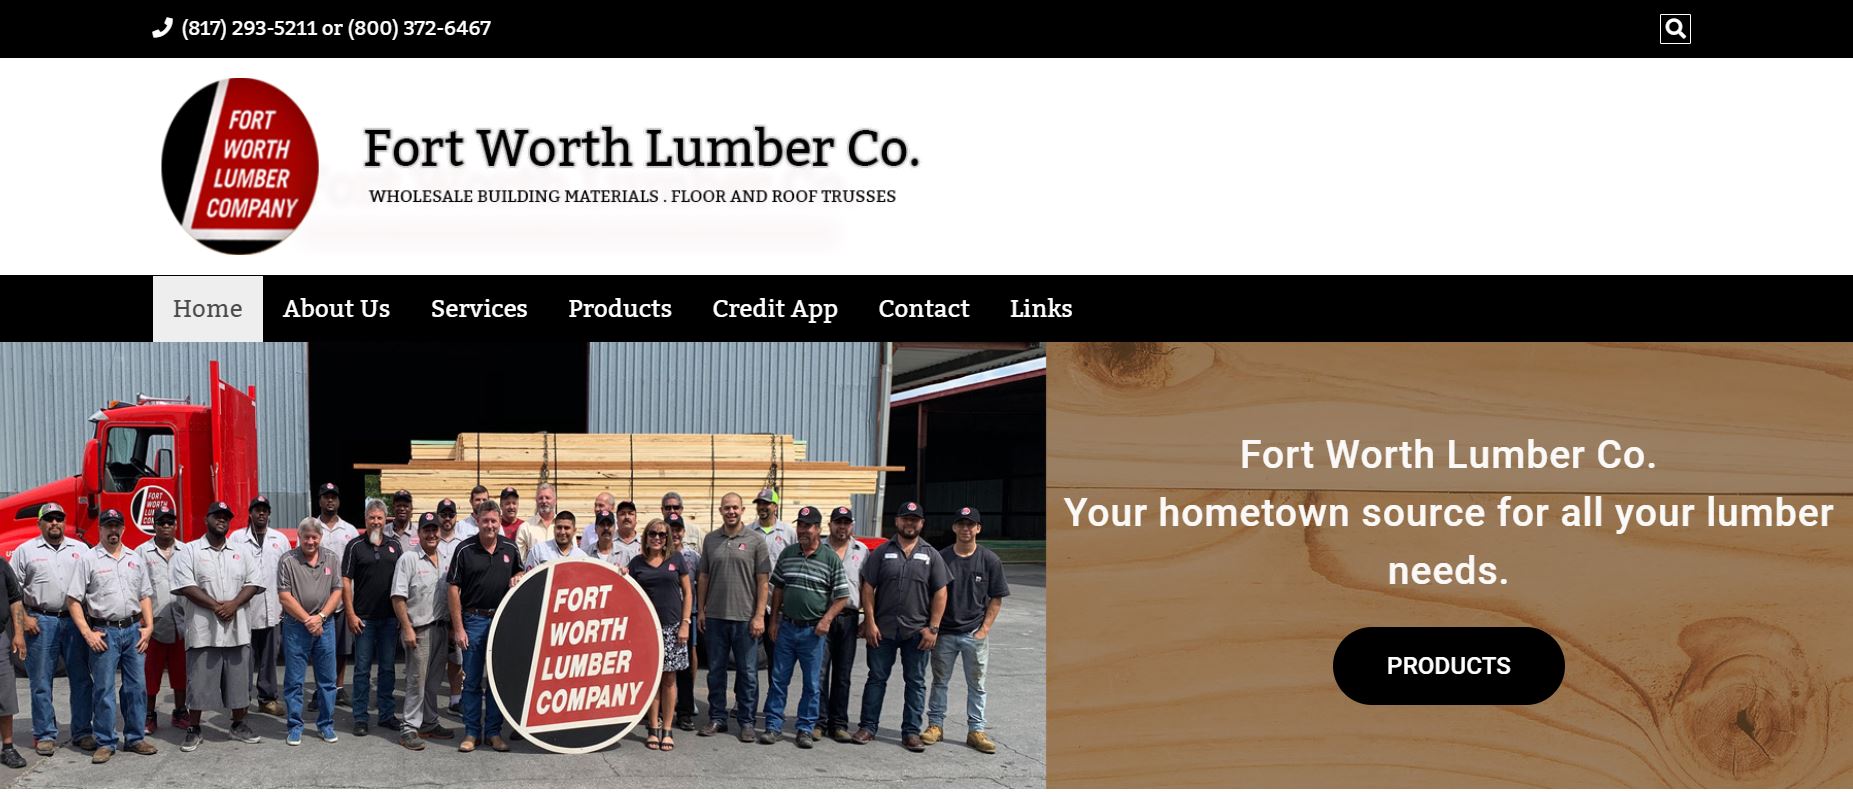 Fort Worth Lumber Company]